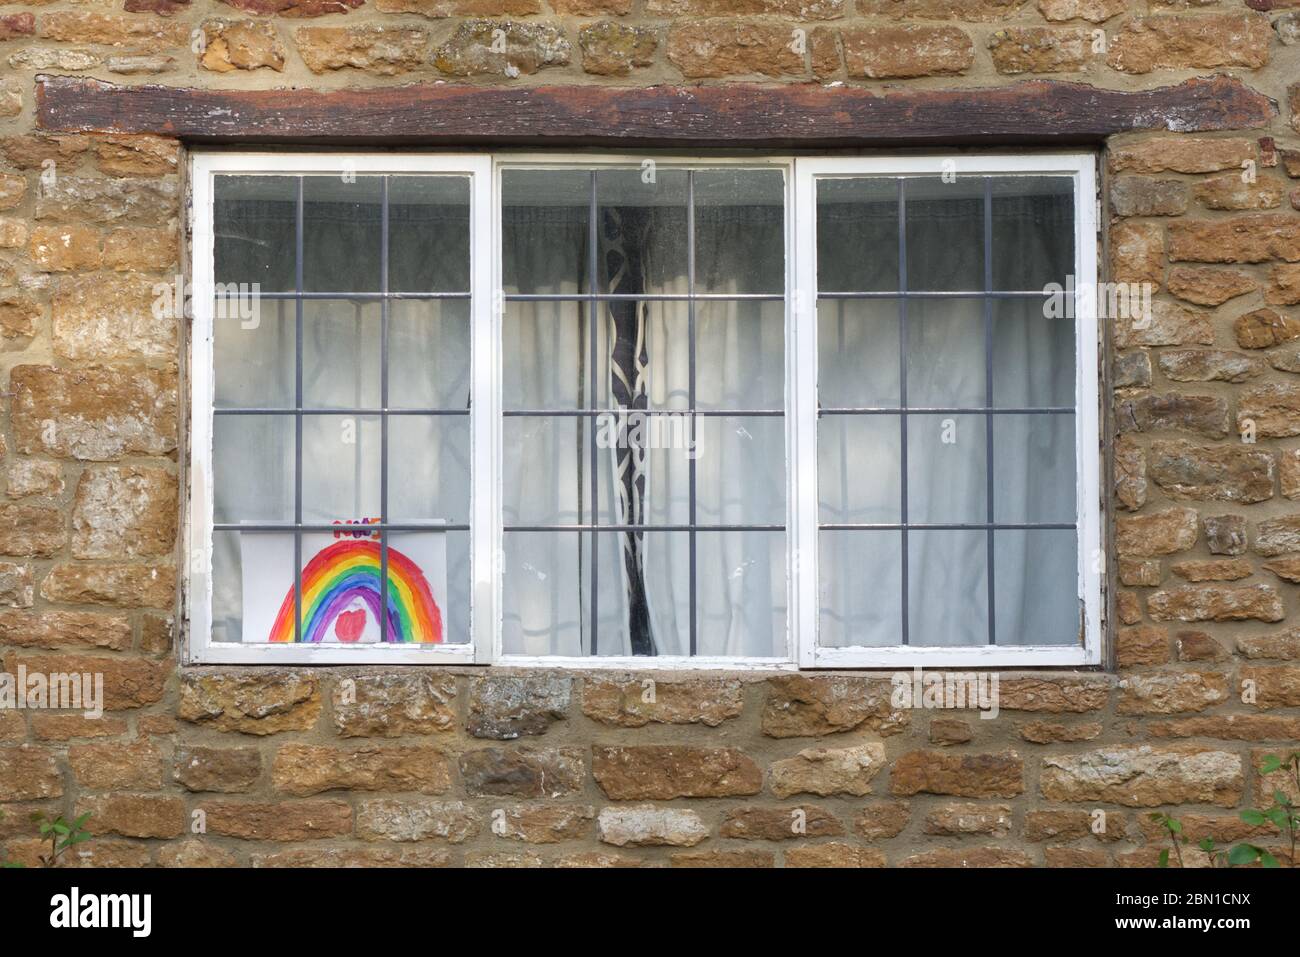 Dibujo de niño del arco iris de esperanza de NHS, ventana de la cabaña, Covid 19 2020 Foto de stock